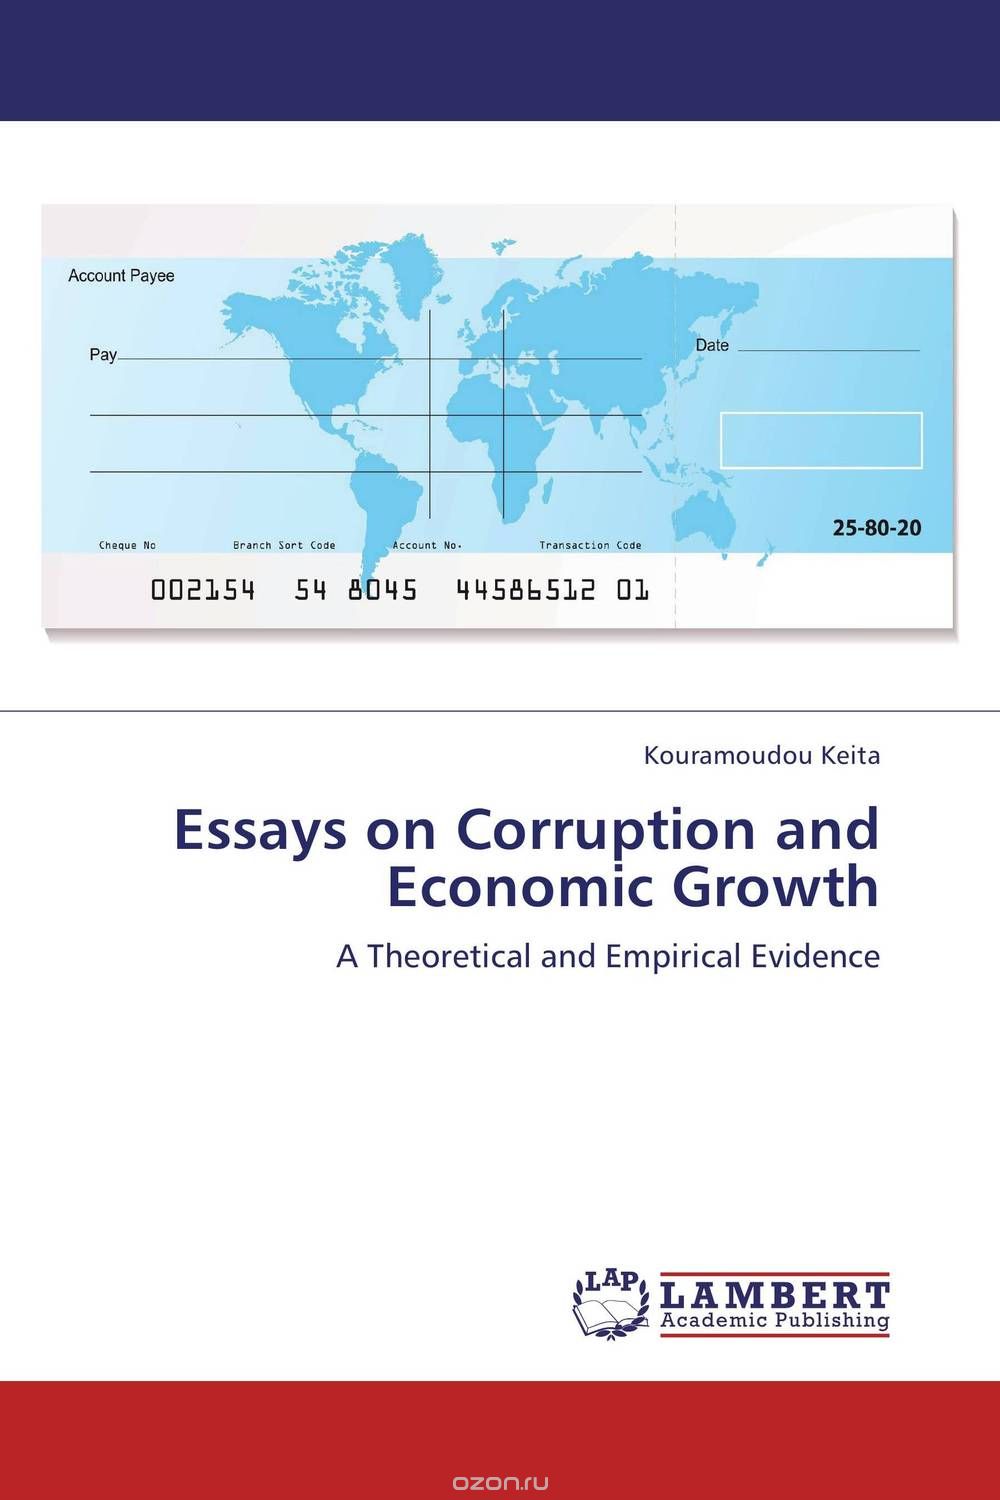 Скачать книгу "Essays on Corruption and Economic Growth"